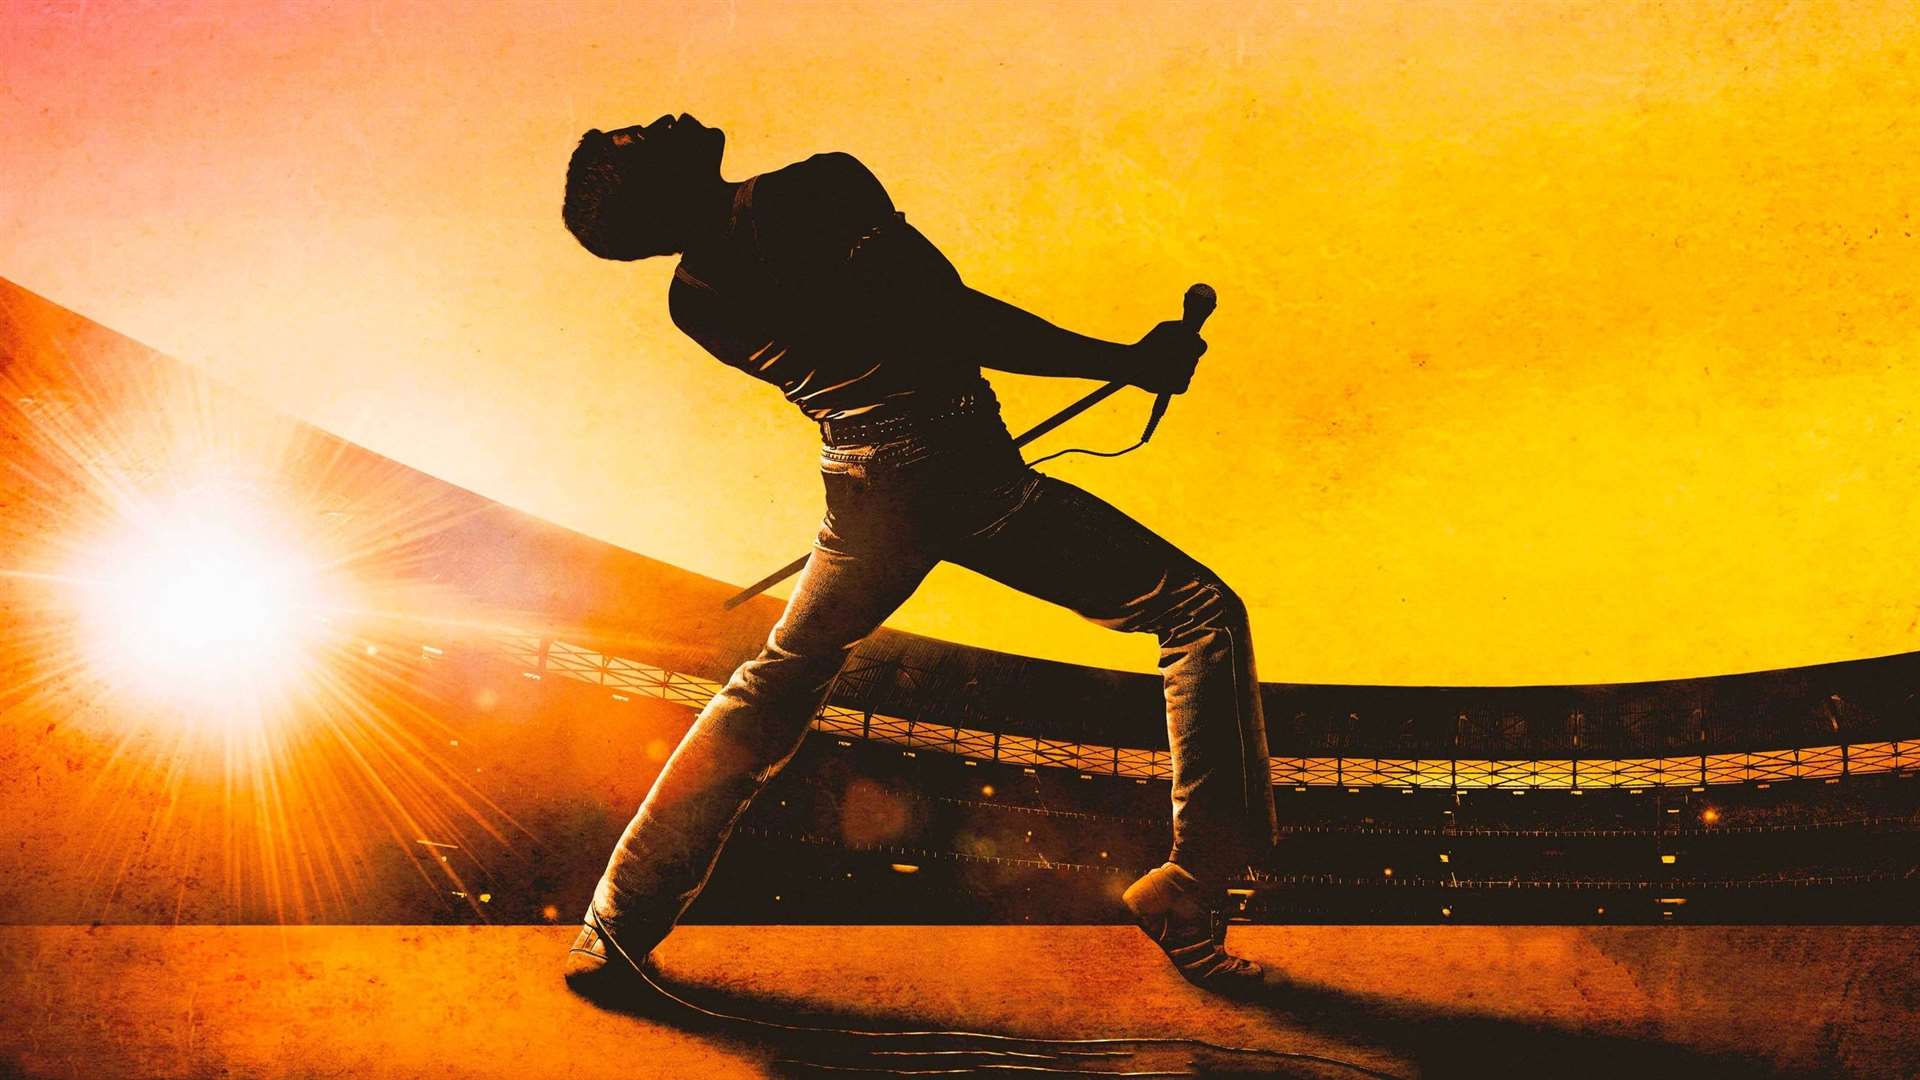 Bohemian Rhapsody is one of the films showing